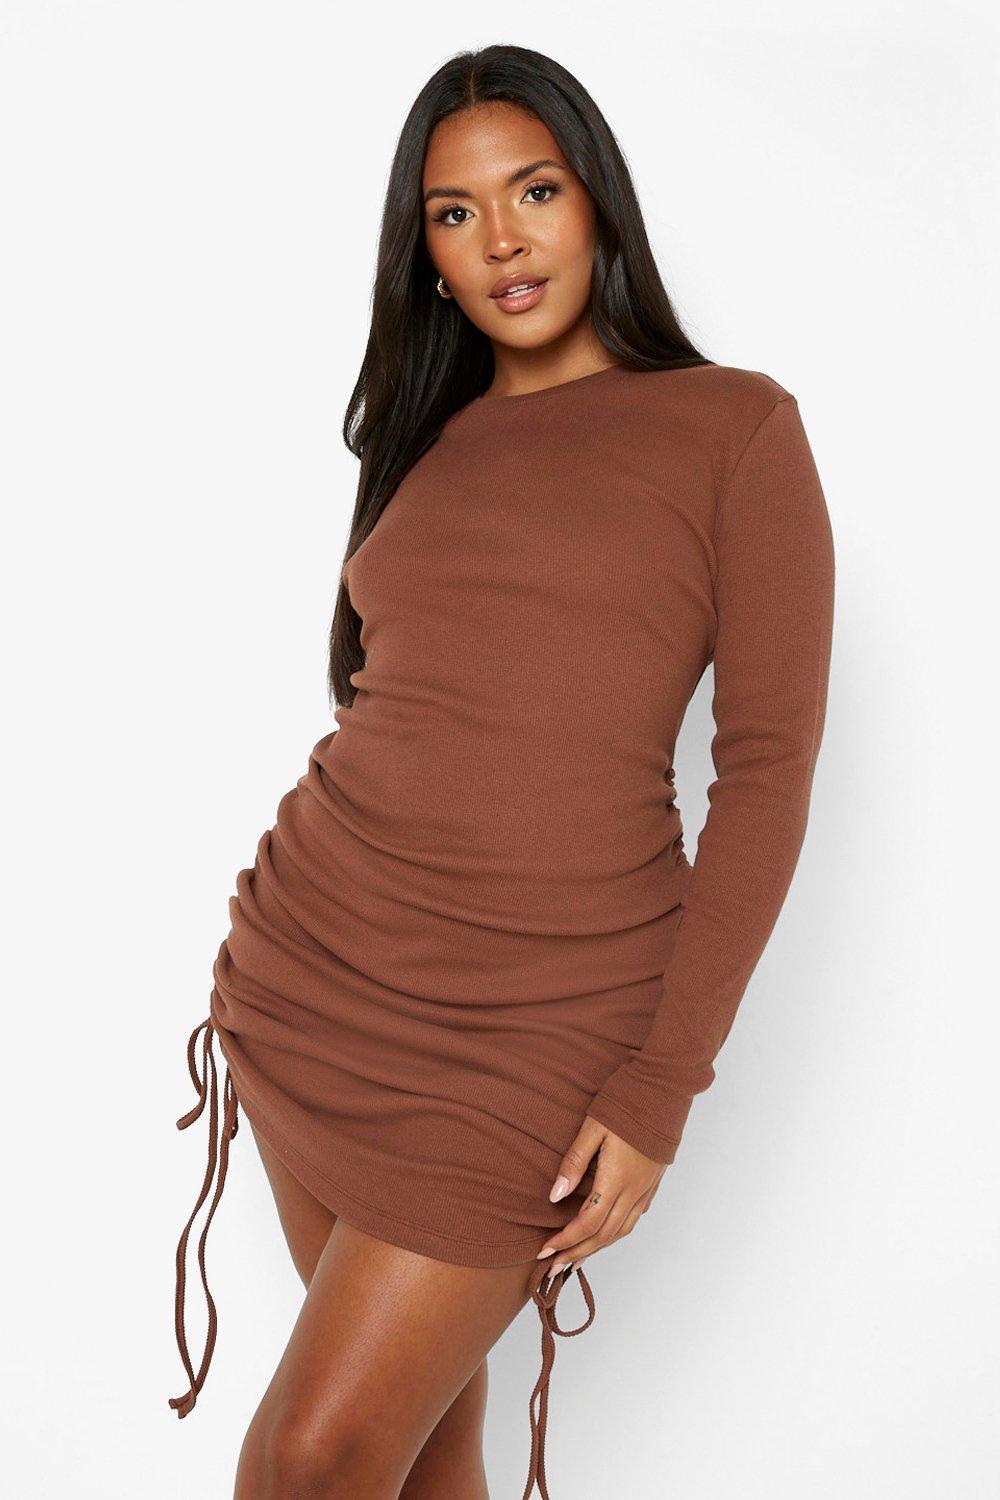 brown long sleeve dress